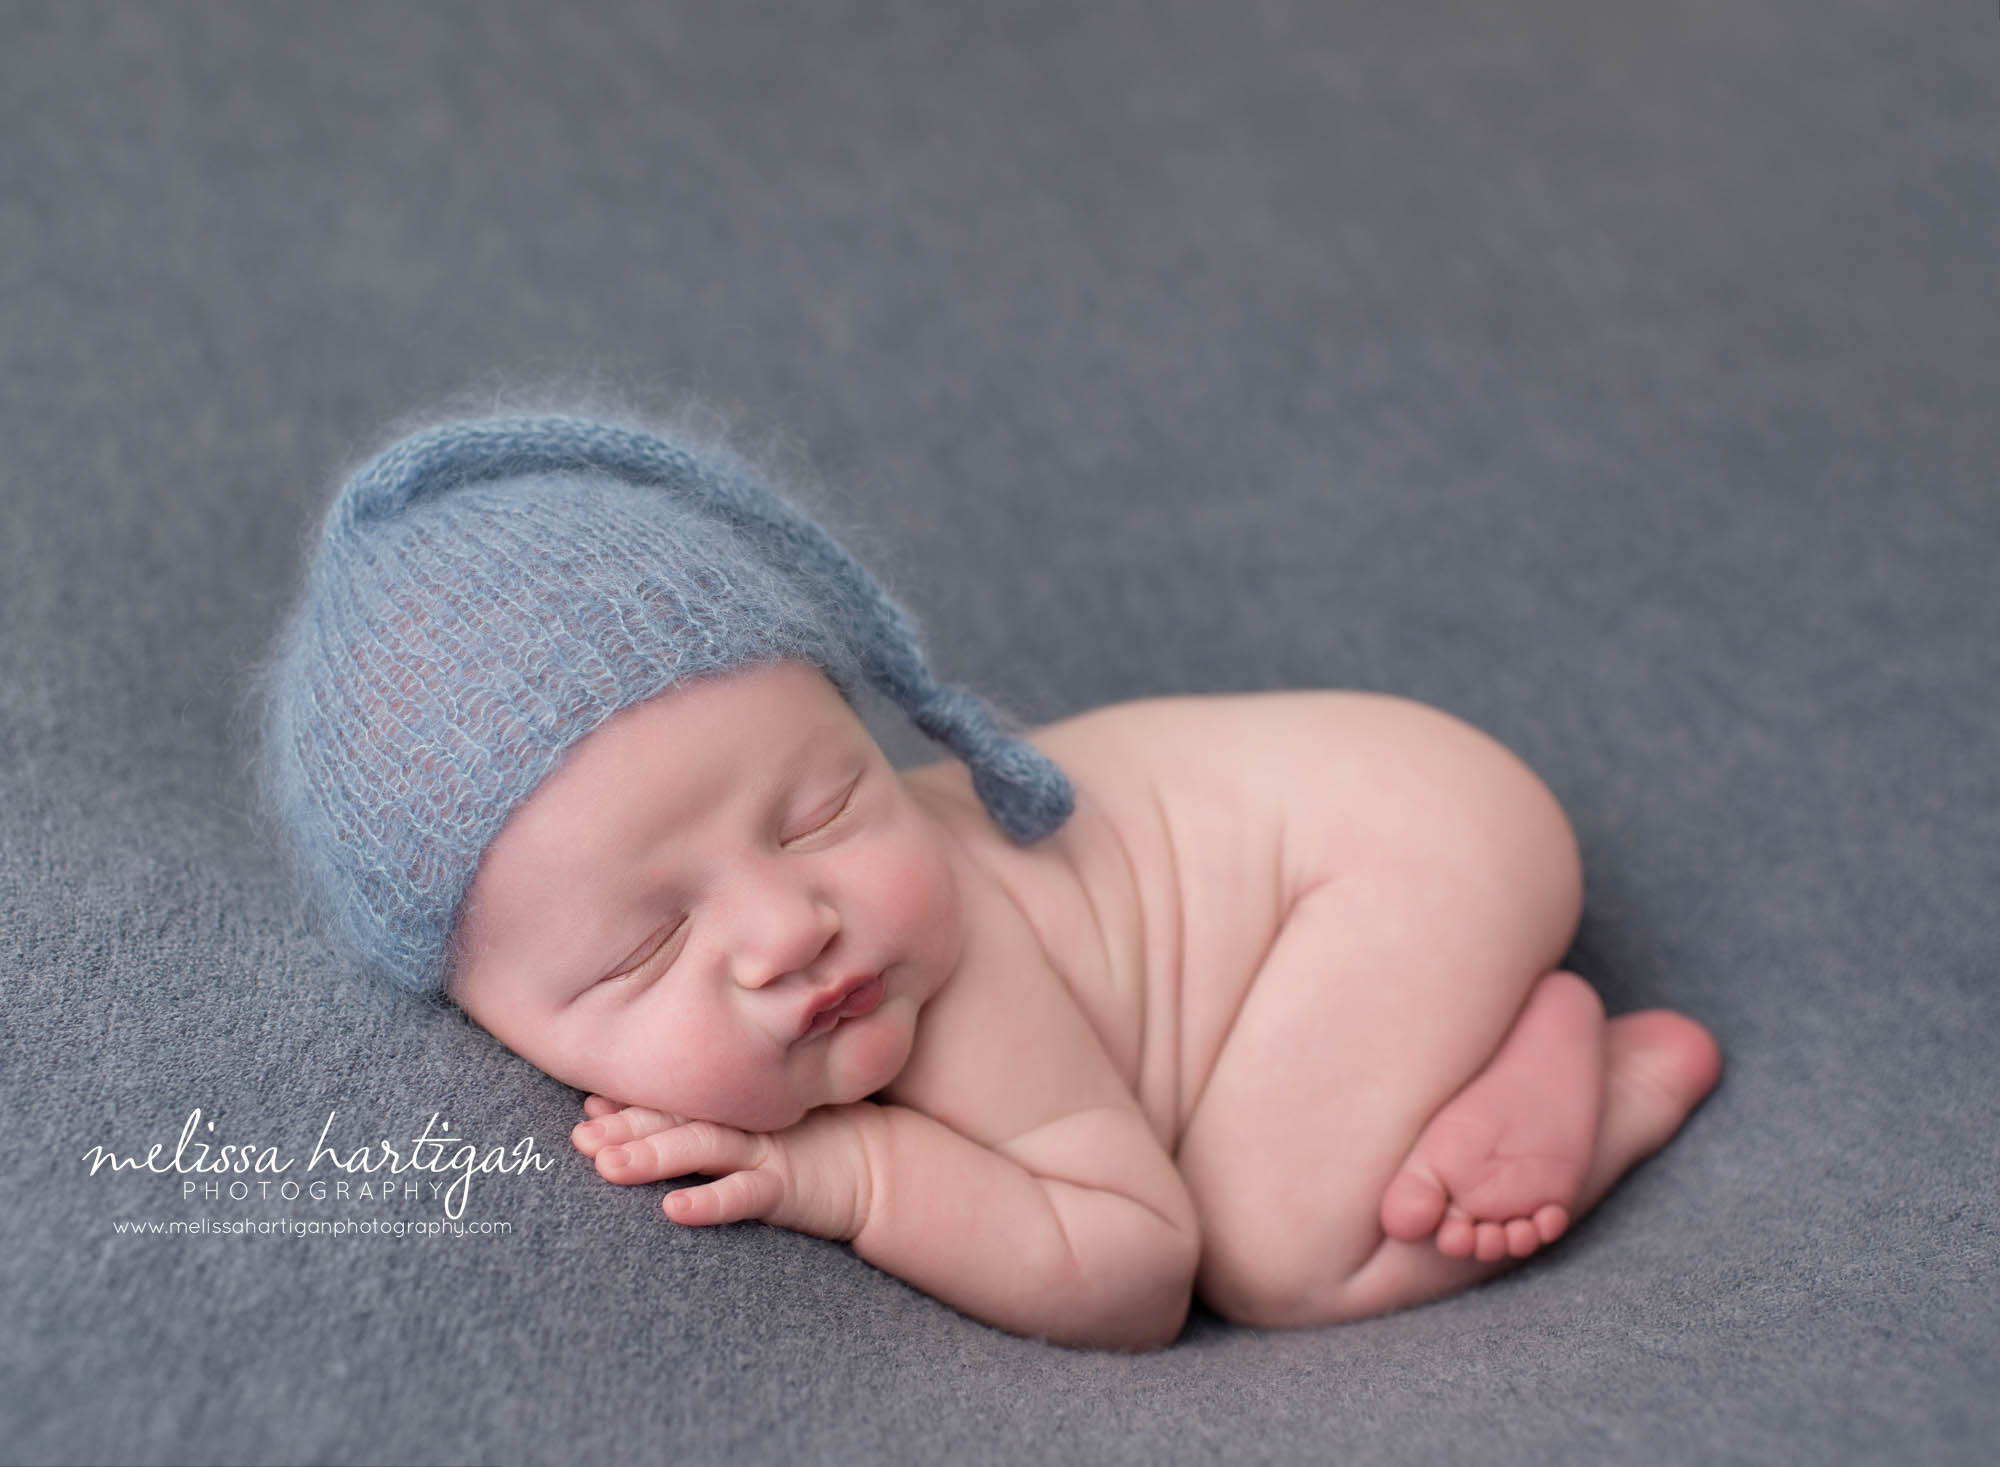 sleeping newborn baby boy posed on tummy with hand under cheek wearing knitted blue sleepy cap